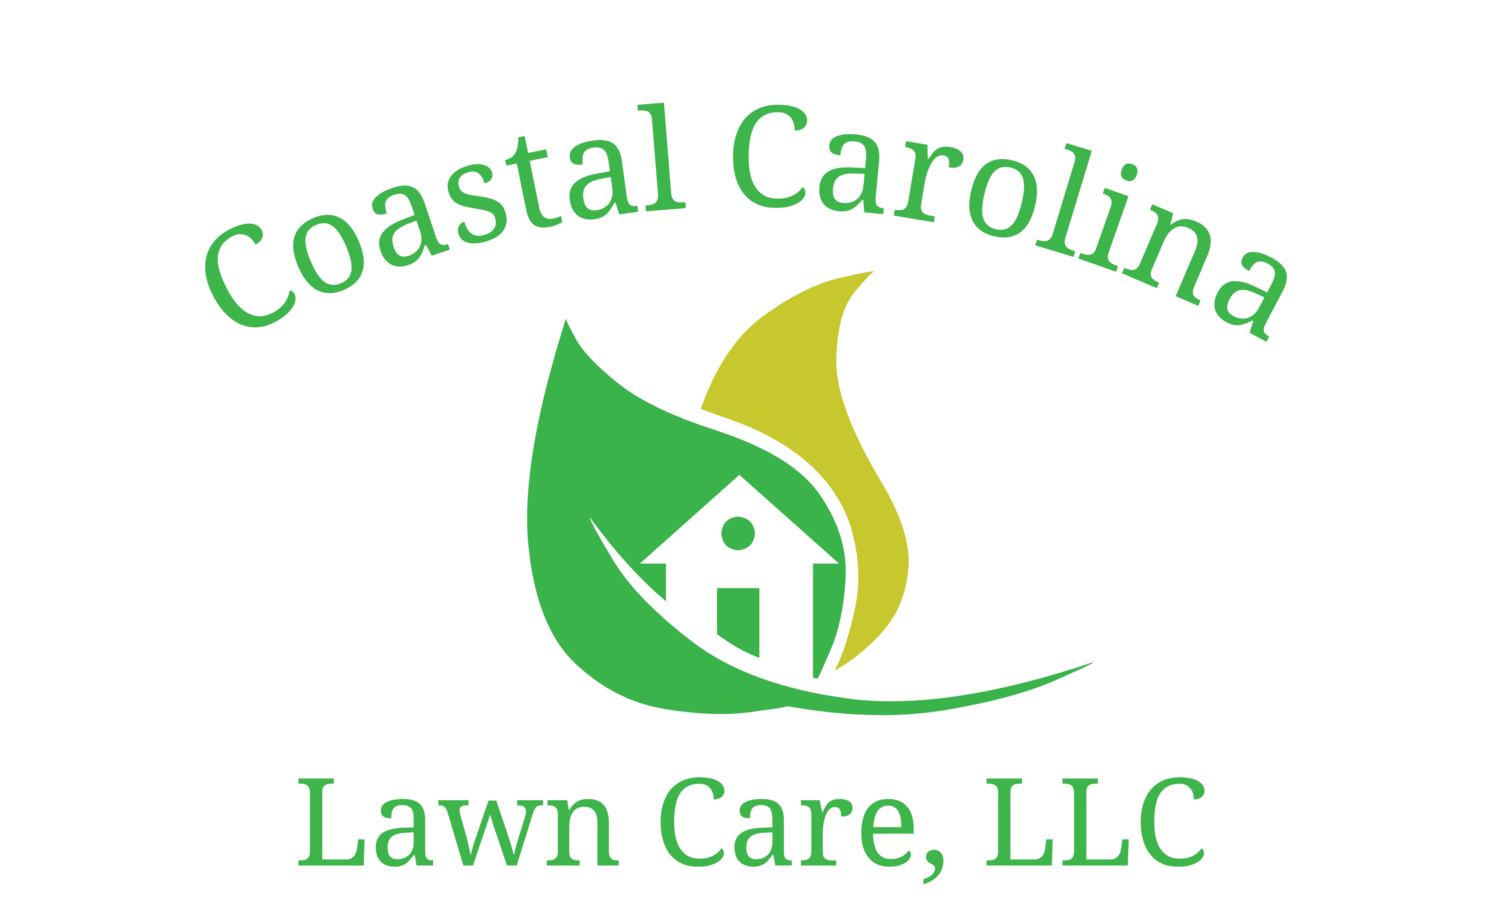 Coastal Carolina Lawn Care